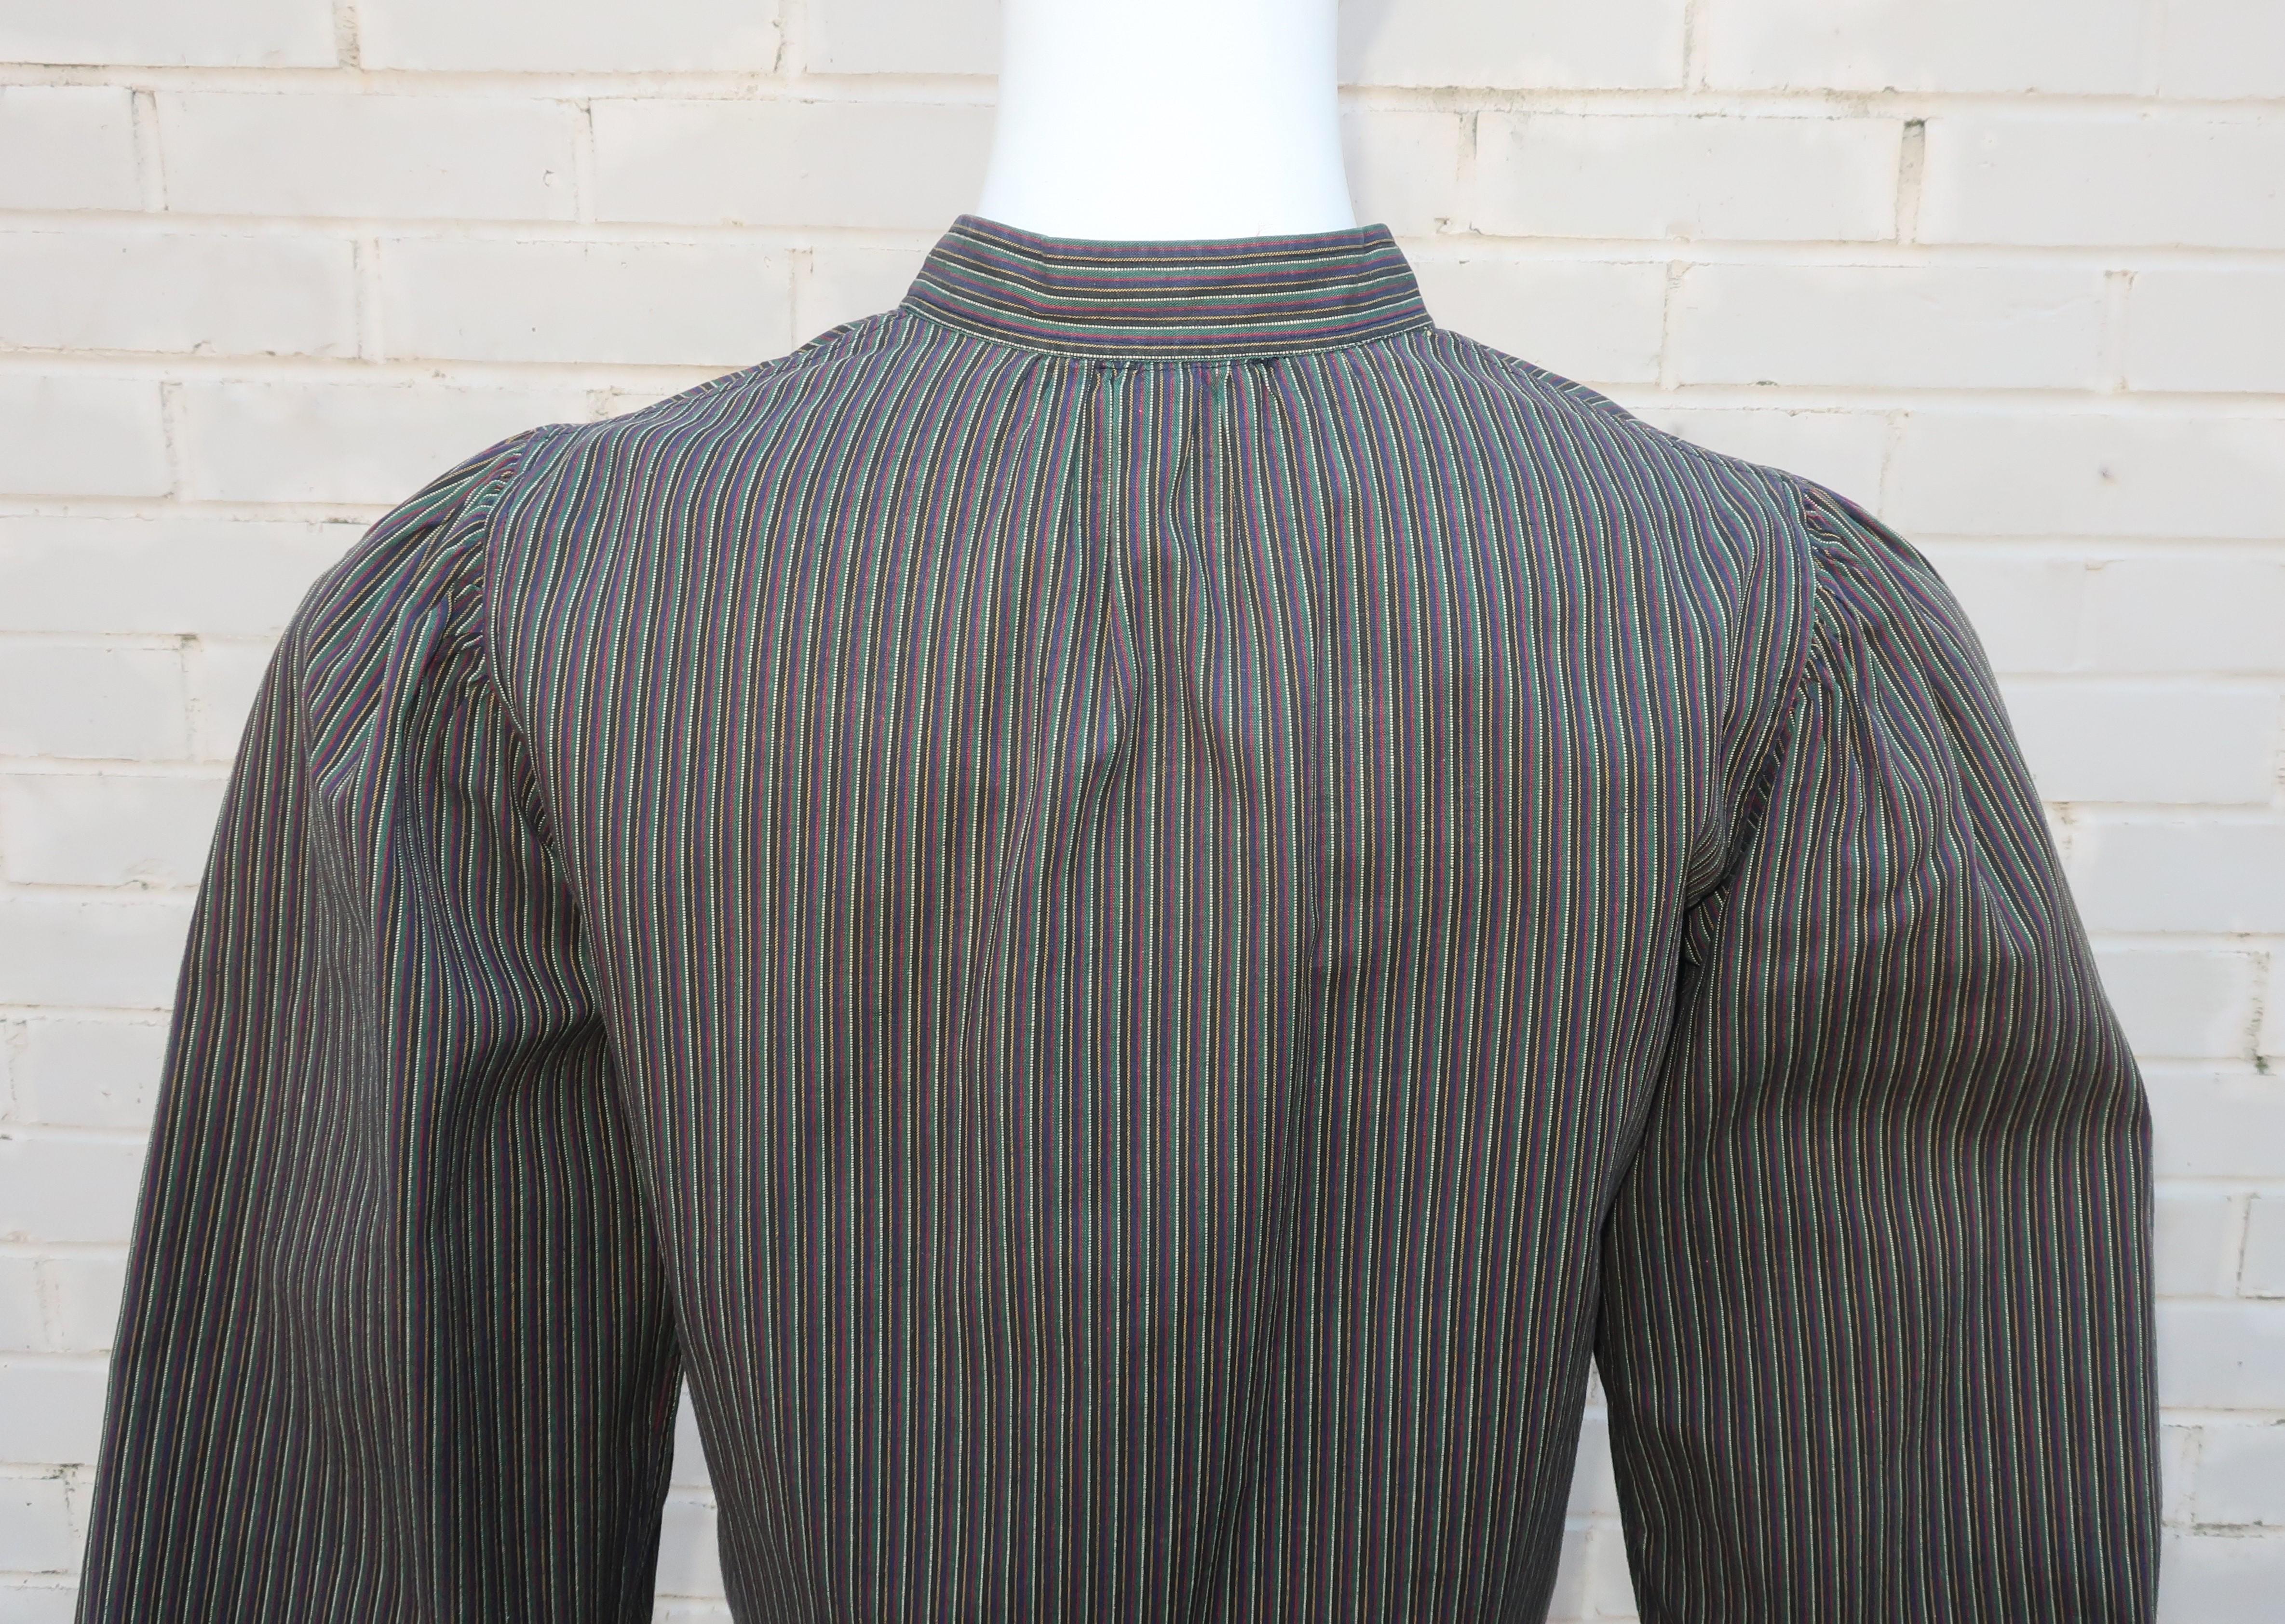 Yves Saint Laurent Striped Cotton Peasant Style Blouse, 1970's For Sale 5